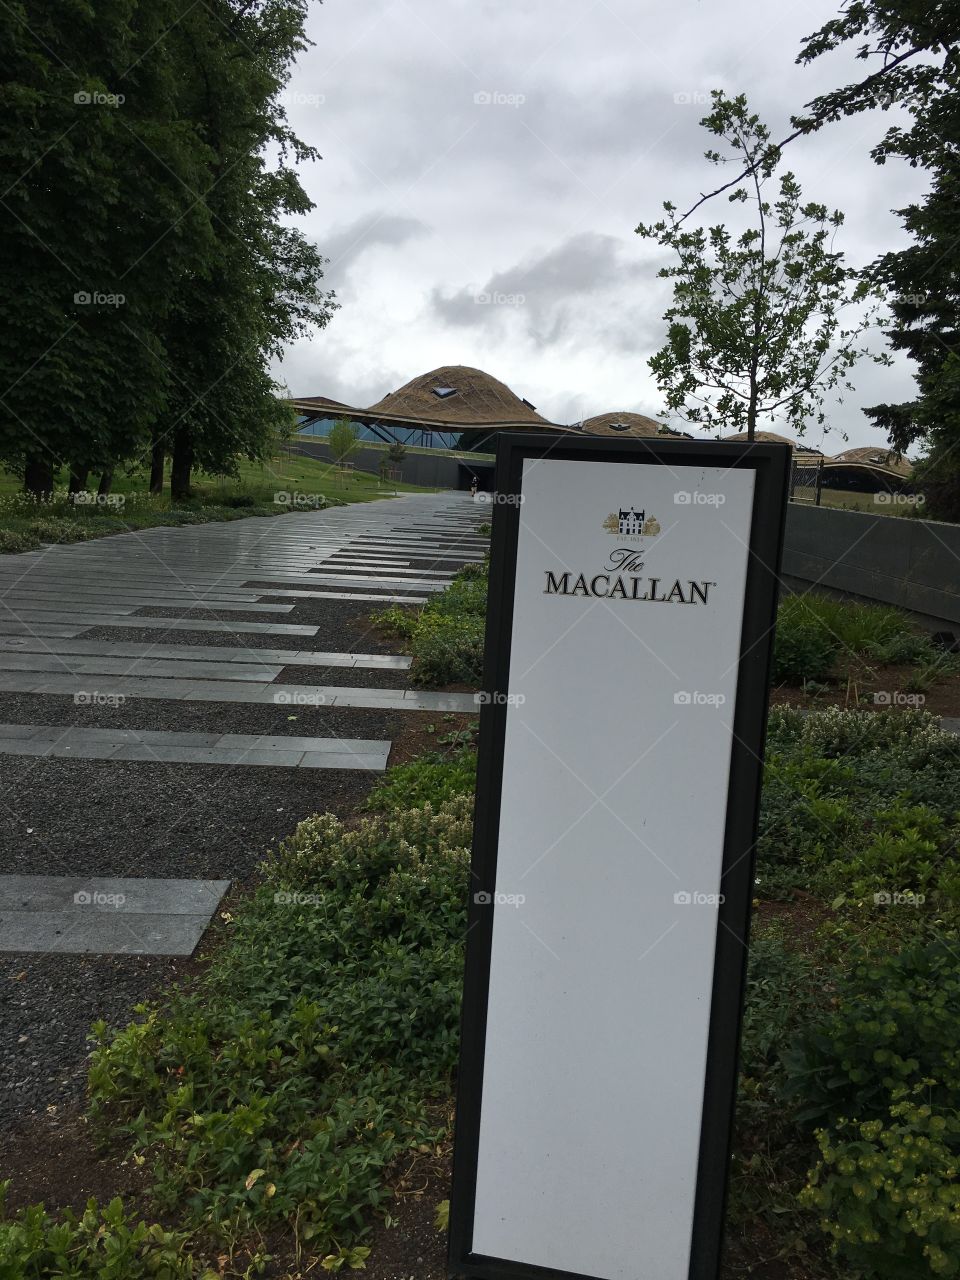 Macallan whisky in Scotland 